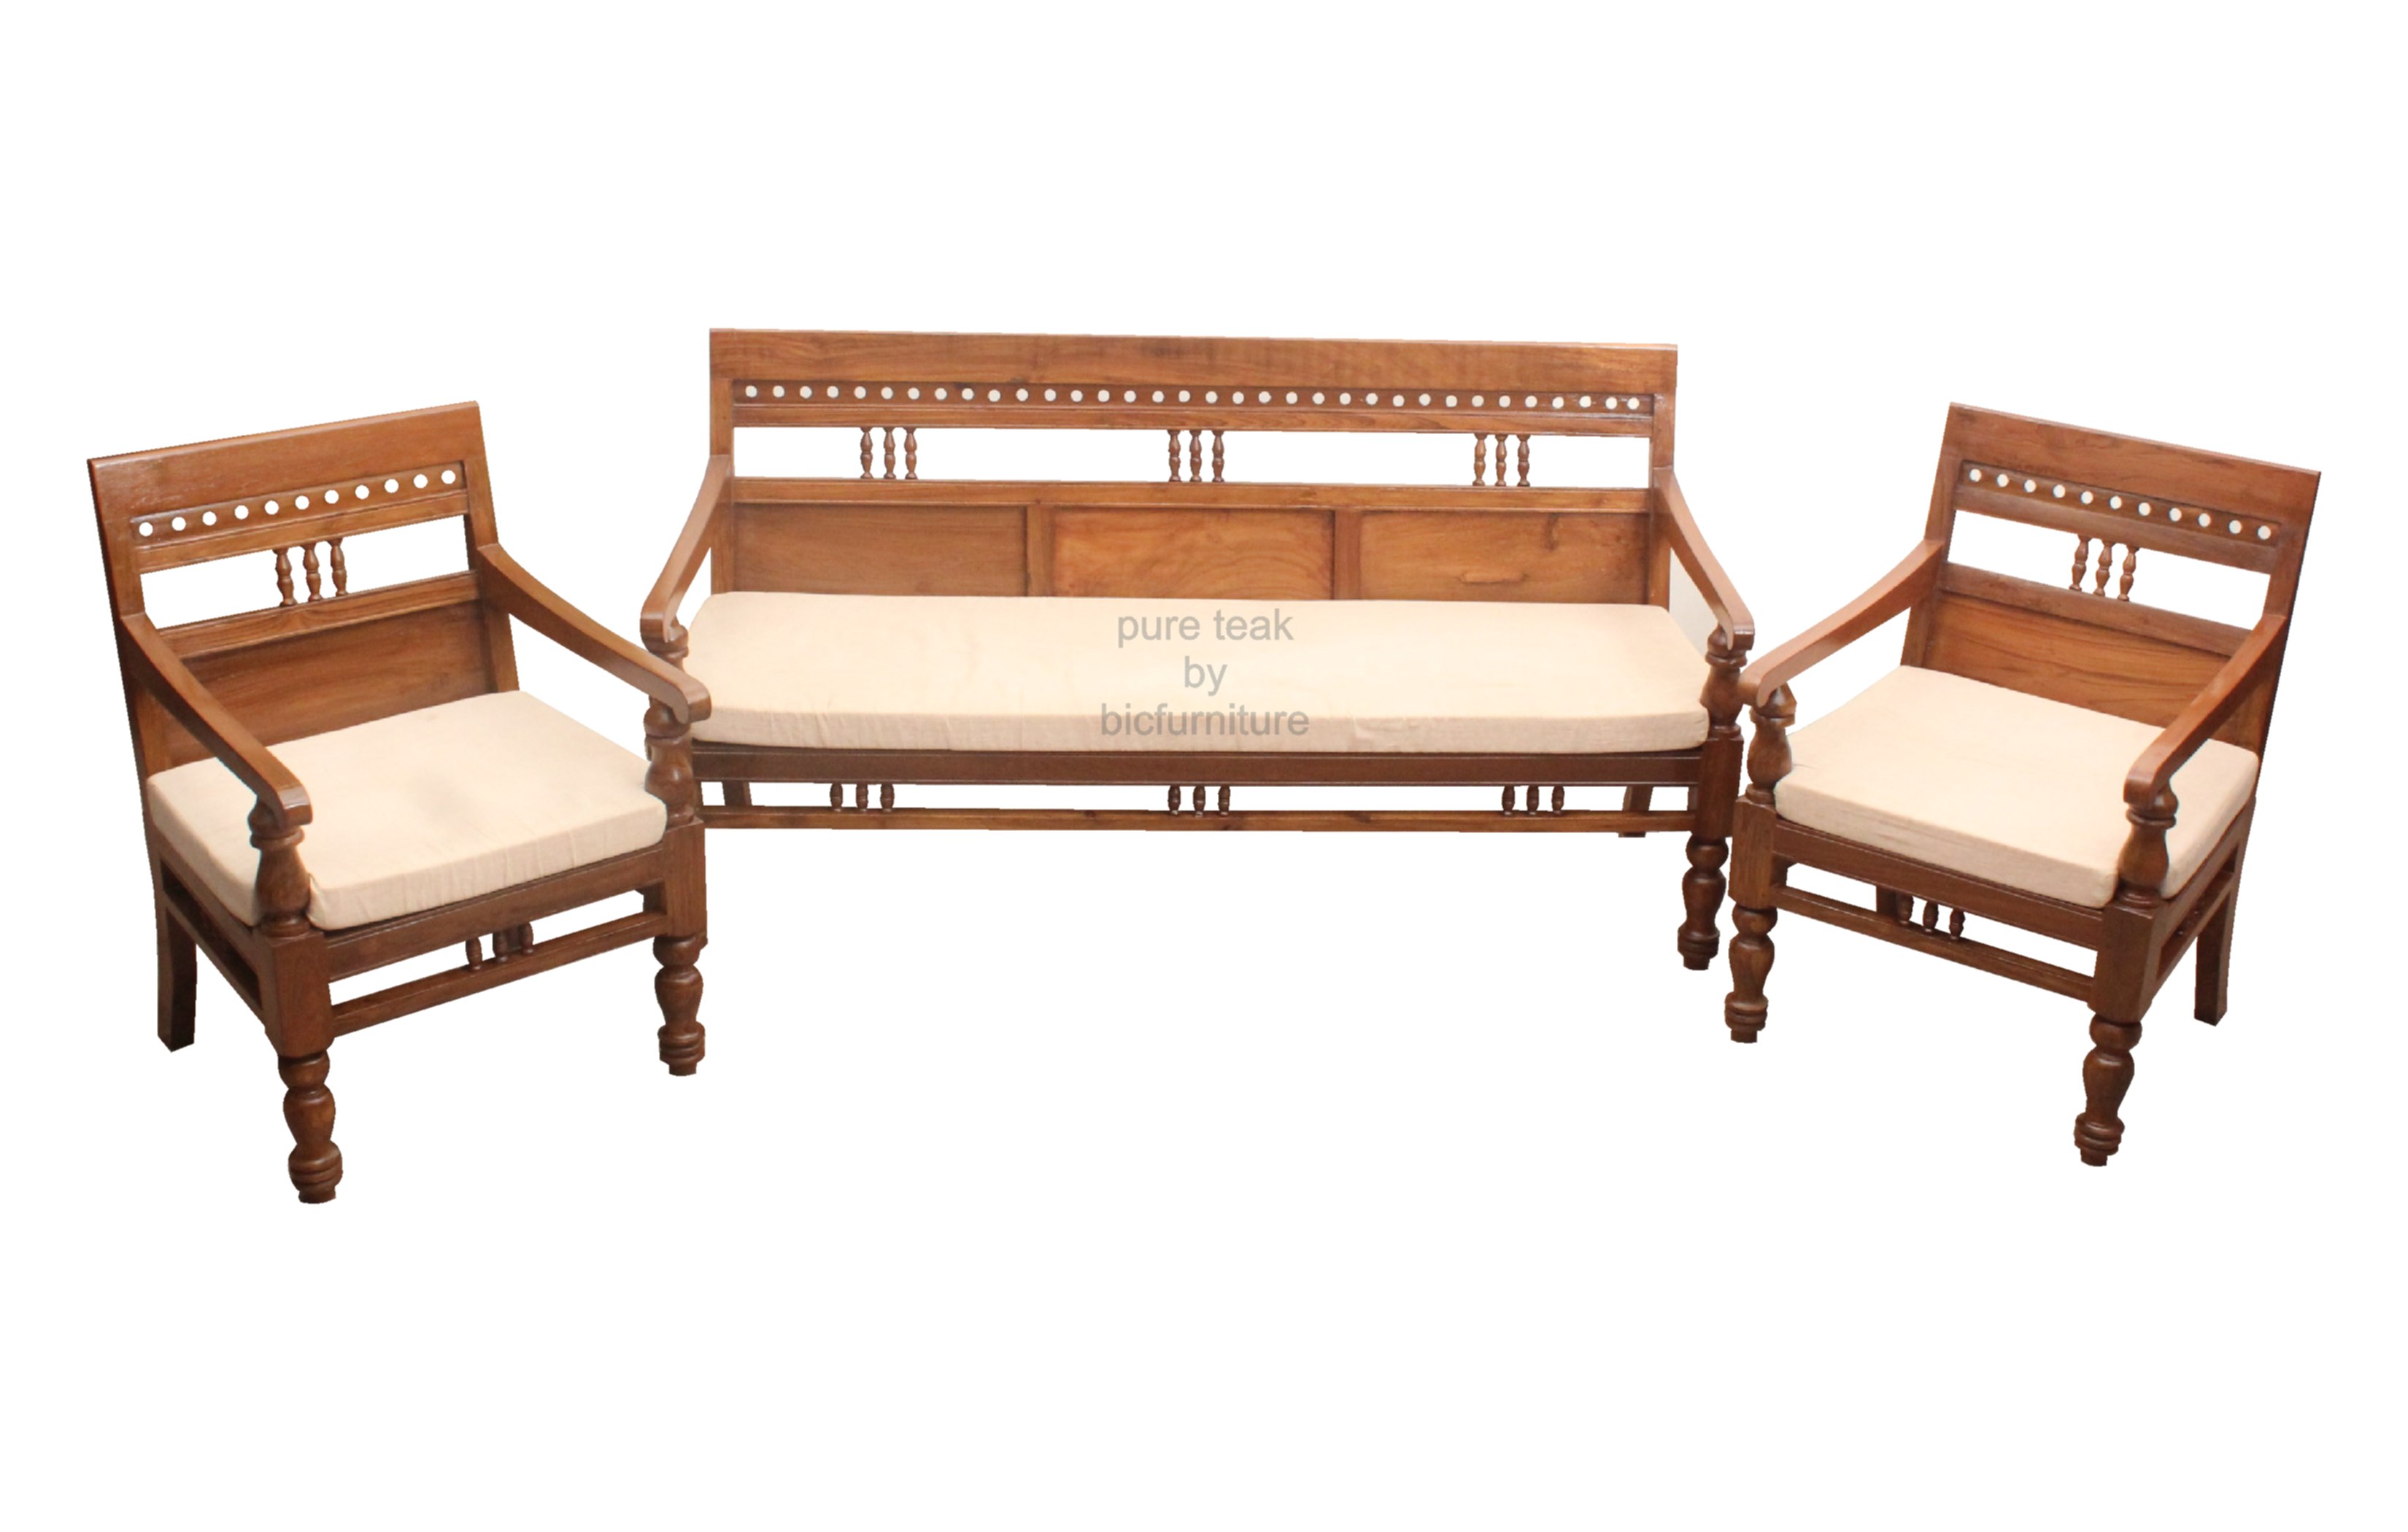 Carved Teak Sofa Set In Elegant Design, Wooden Teak Sofa Design